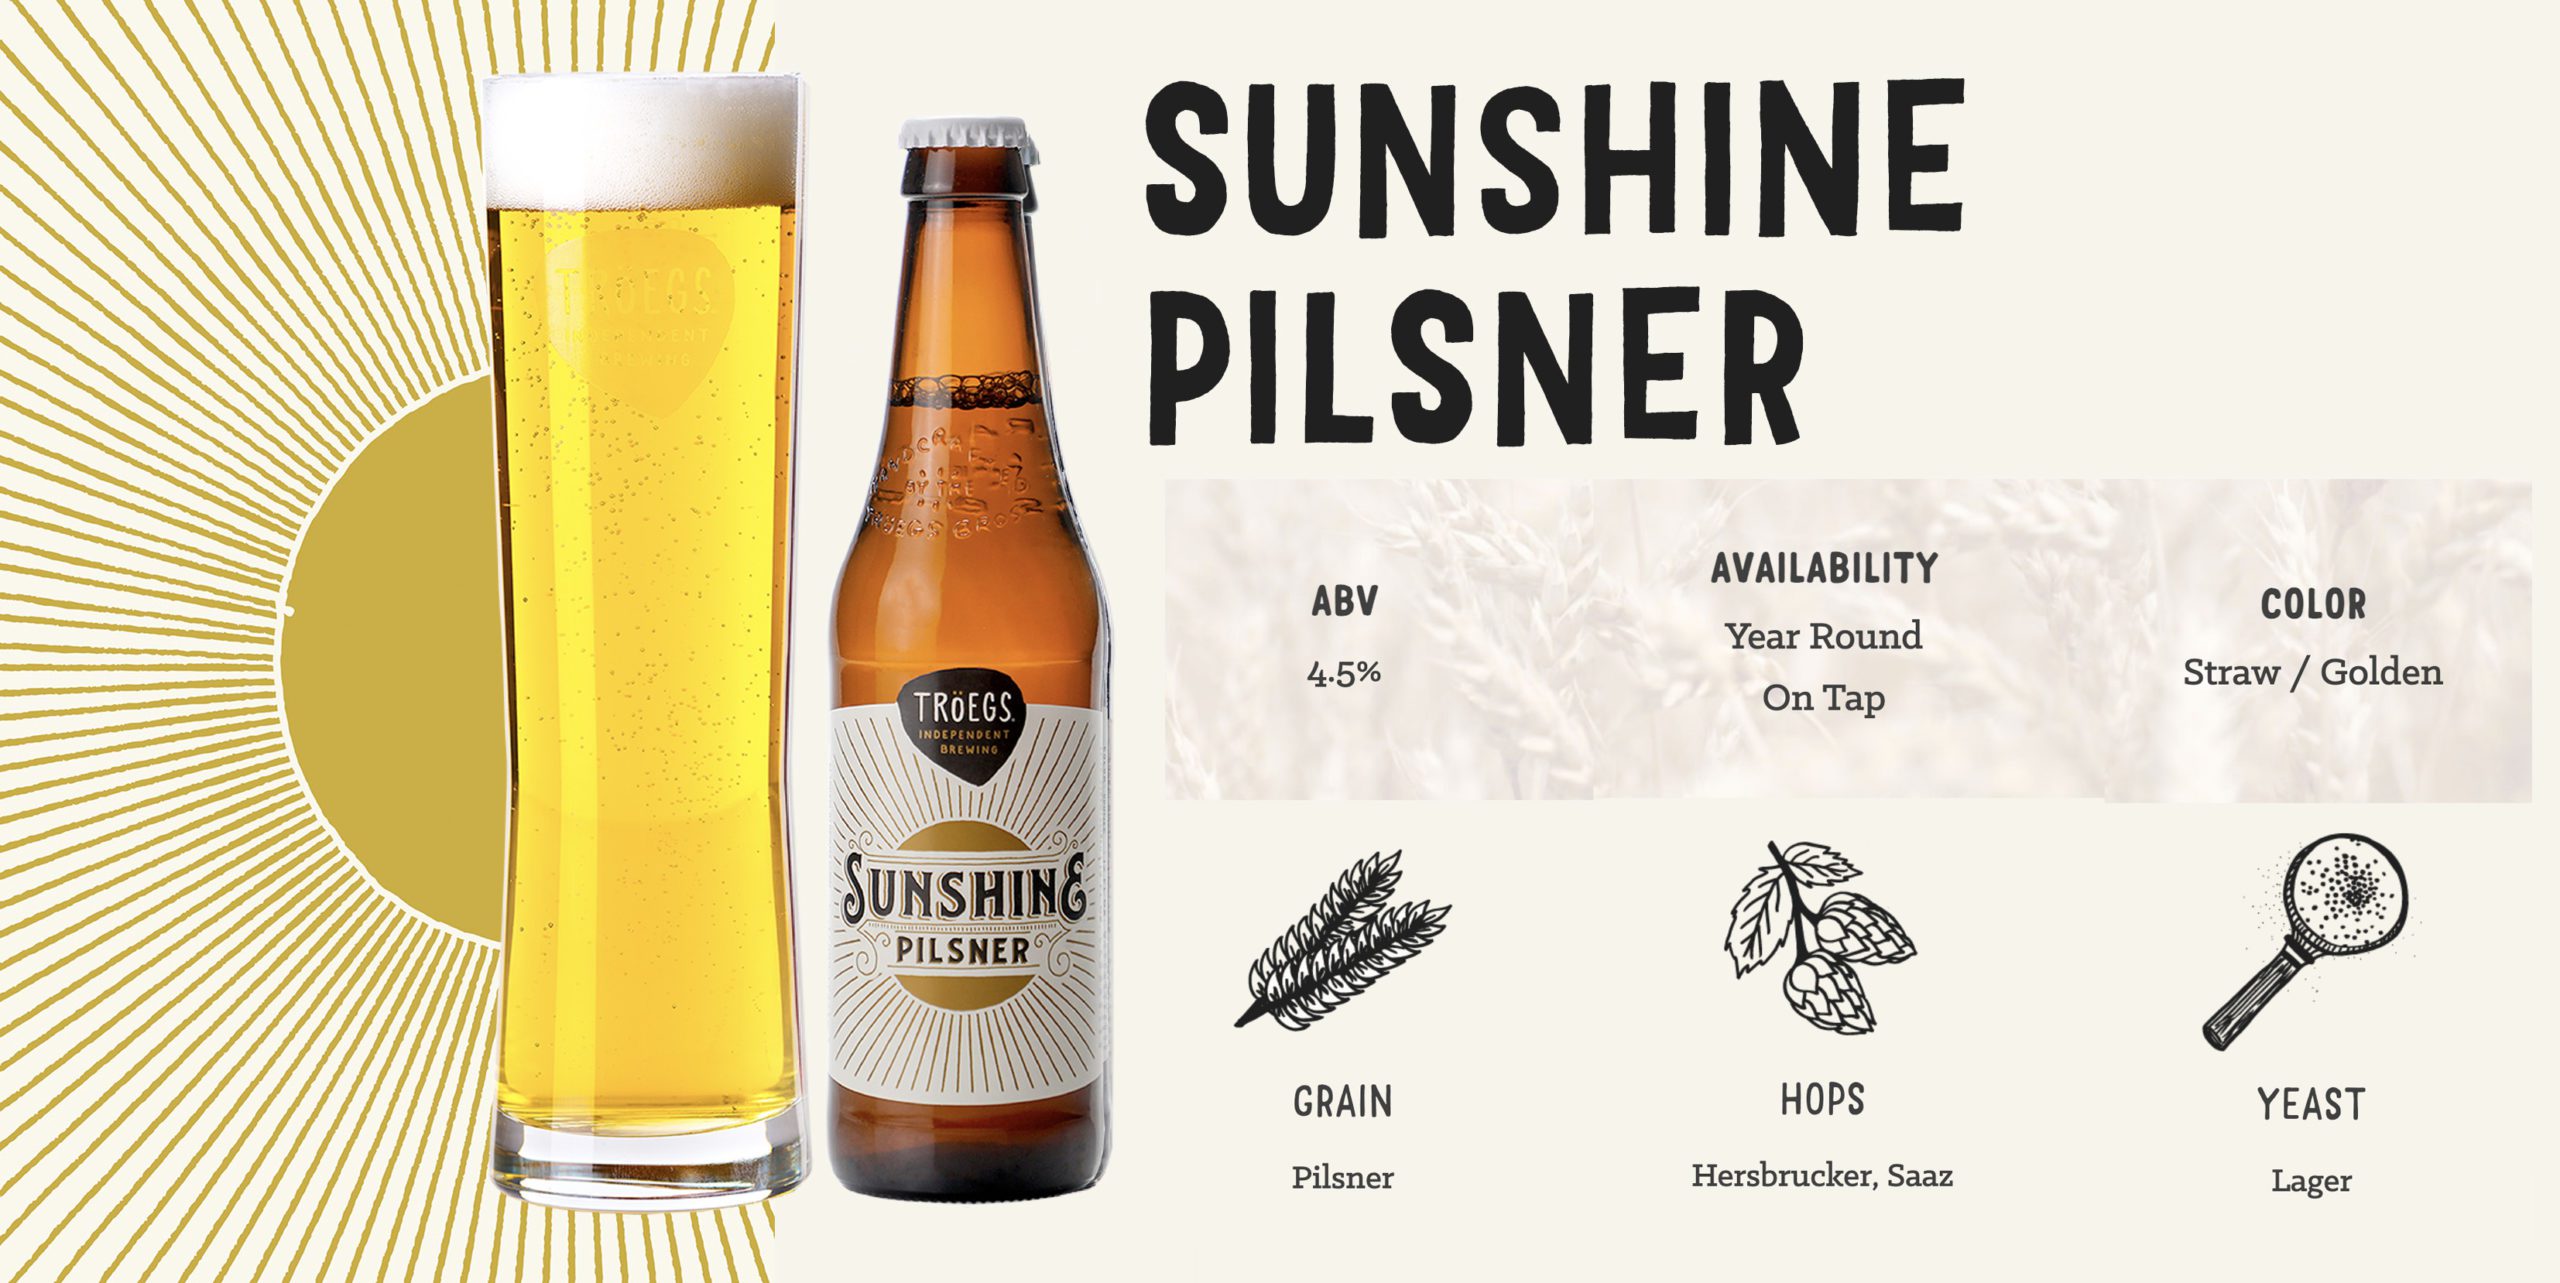 Sunshine Pilsner info graphic.